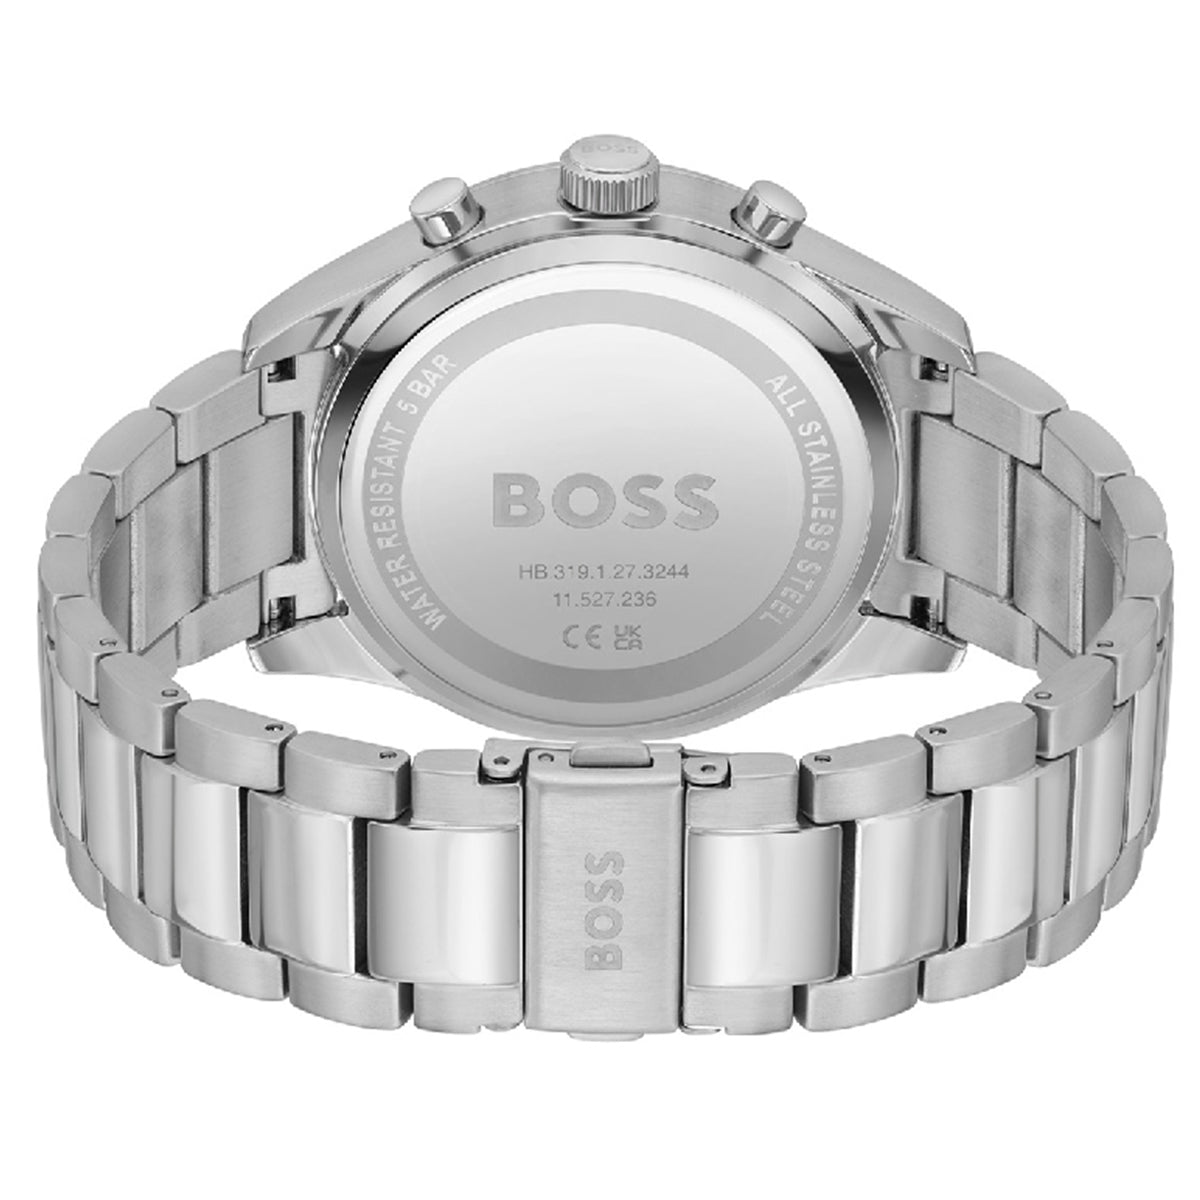 Boss - View - HB151.4008